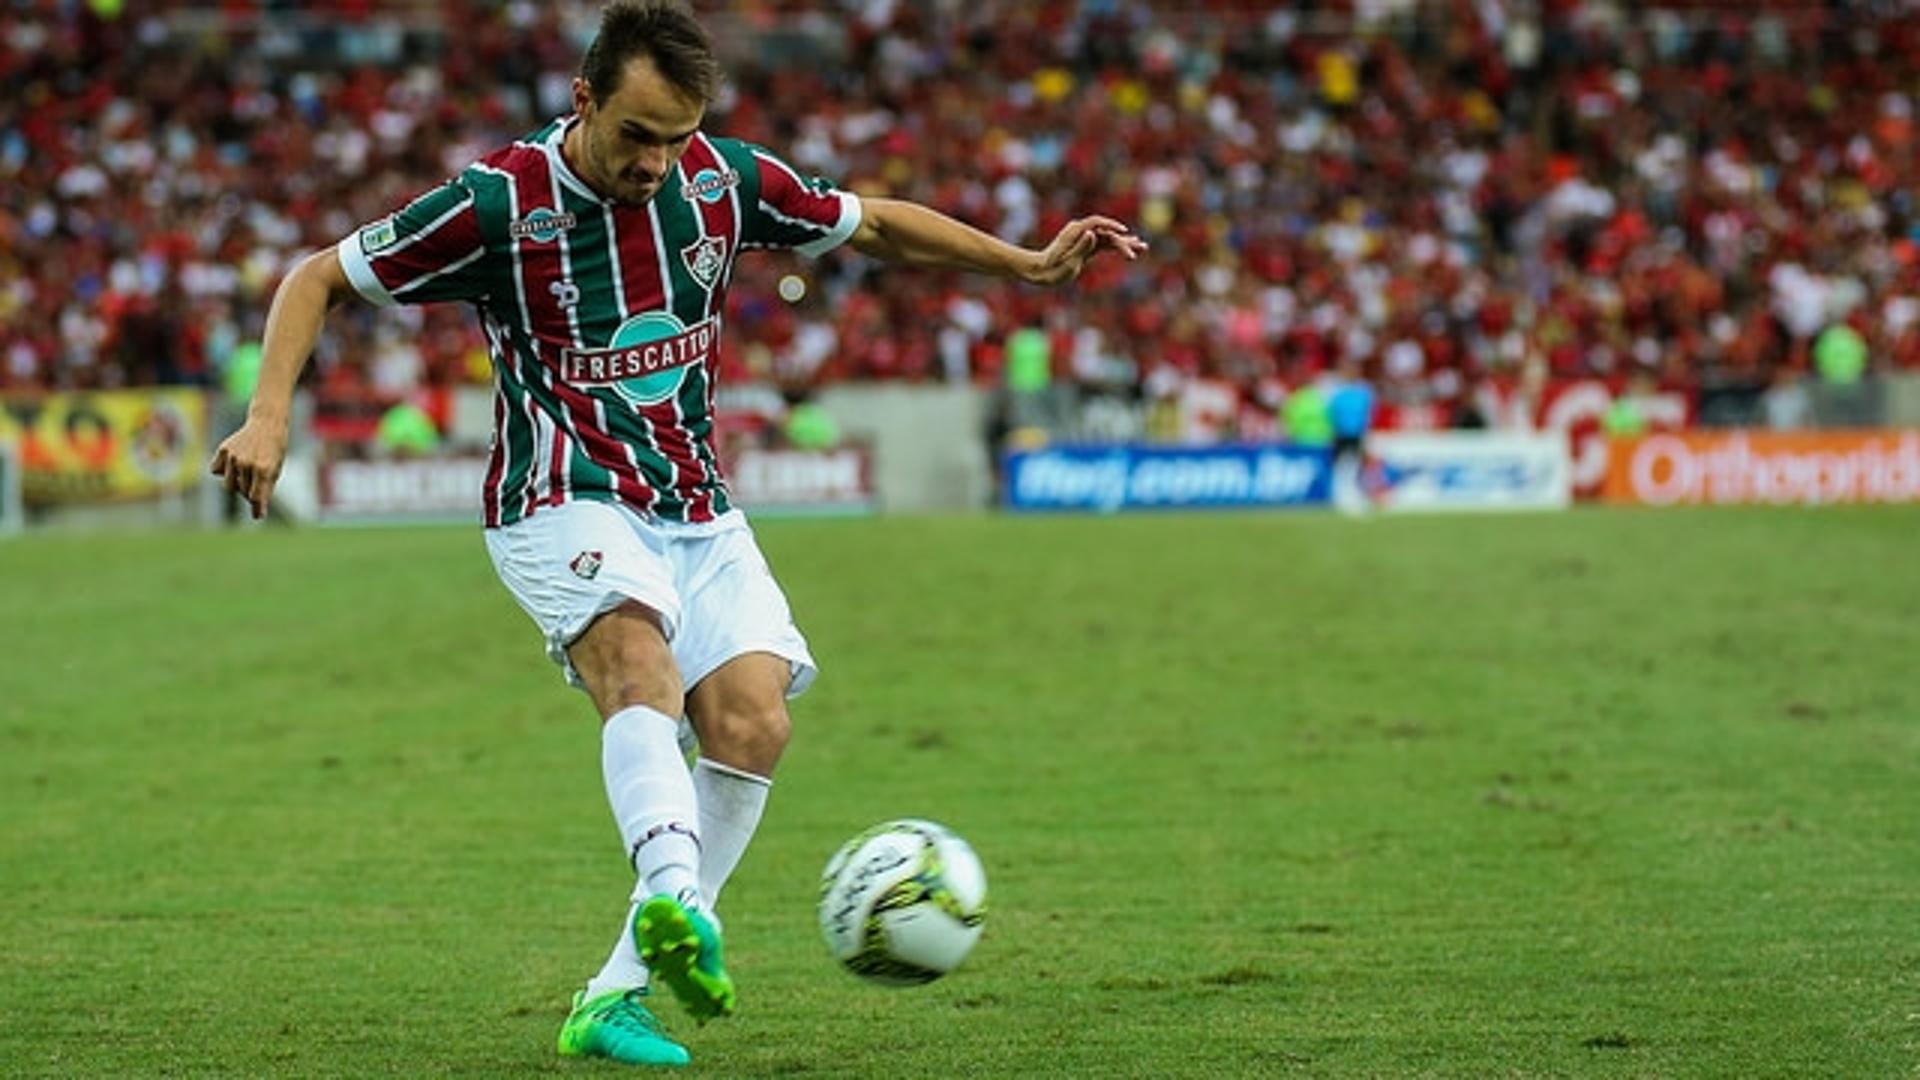 Lucas Fluminense